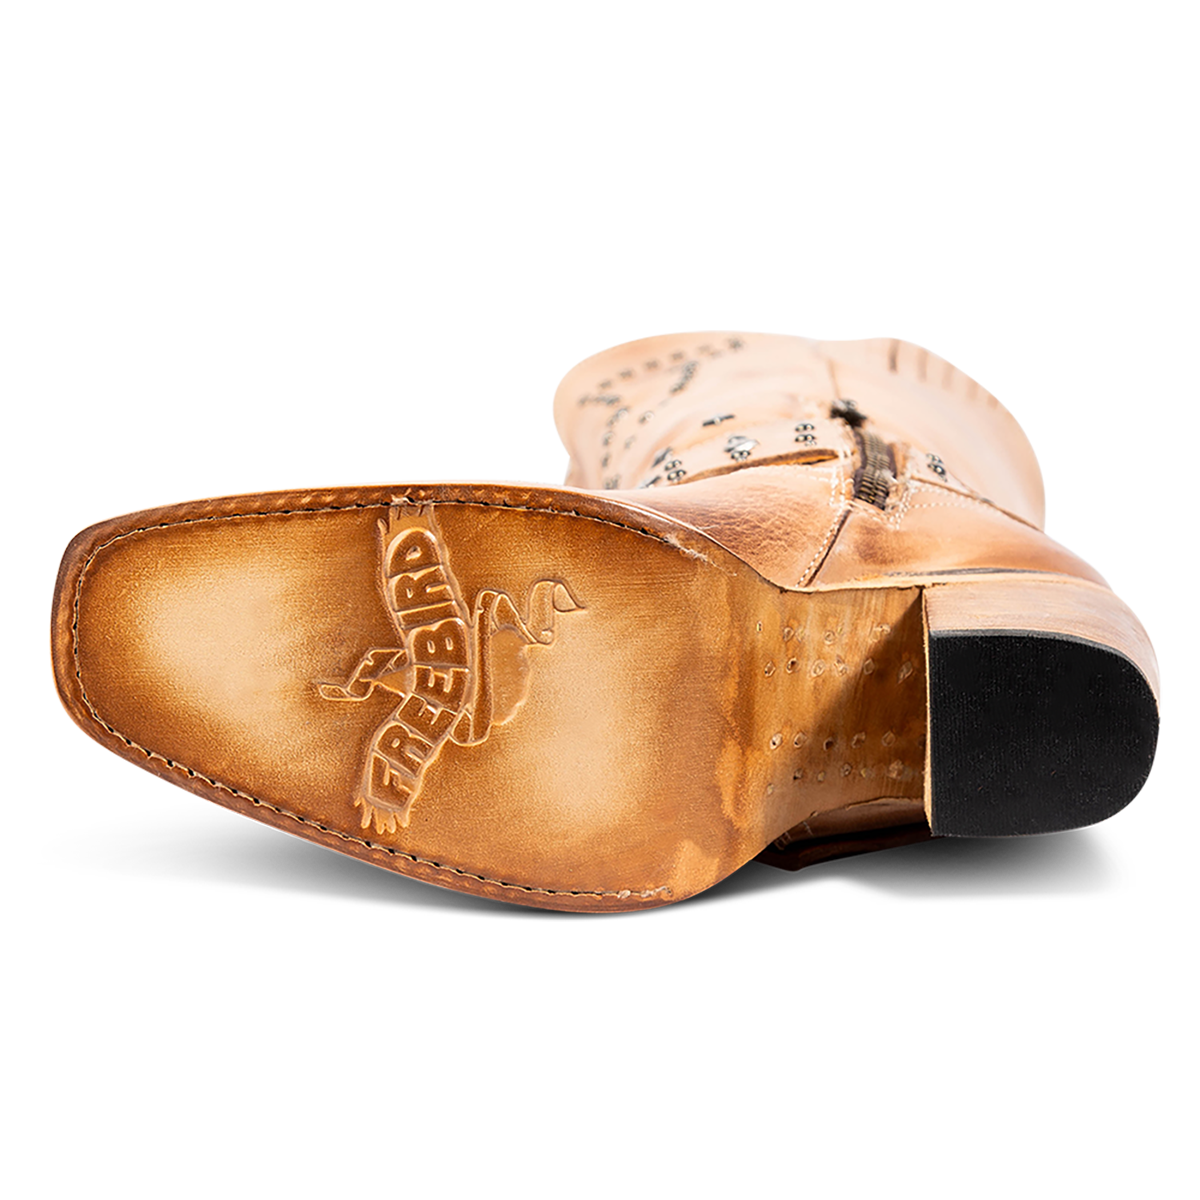 Leather sole imprinted with FREEBIRD on FREEBIRD women's Pamela beige leather boot